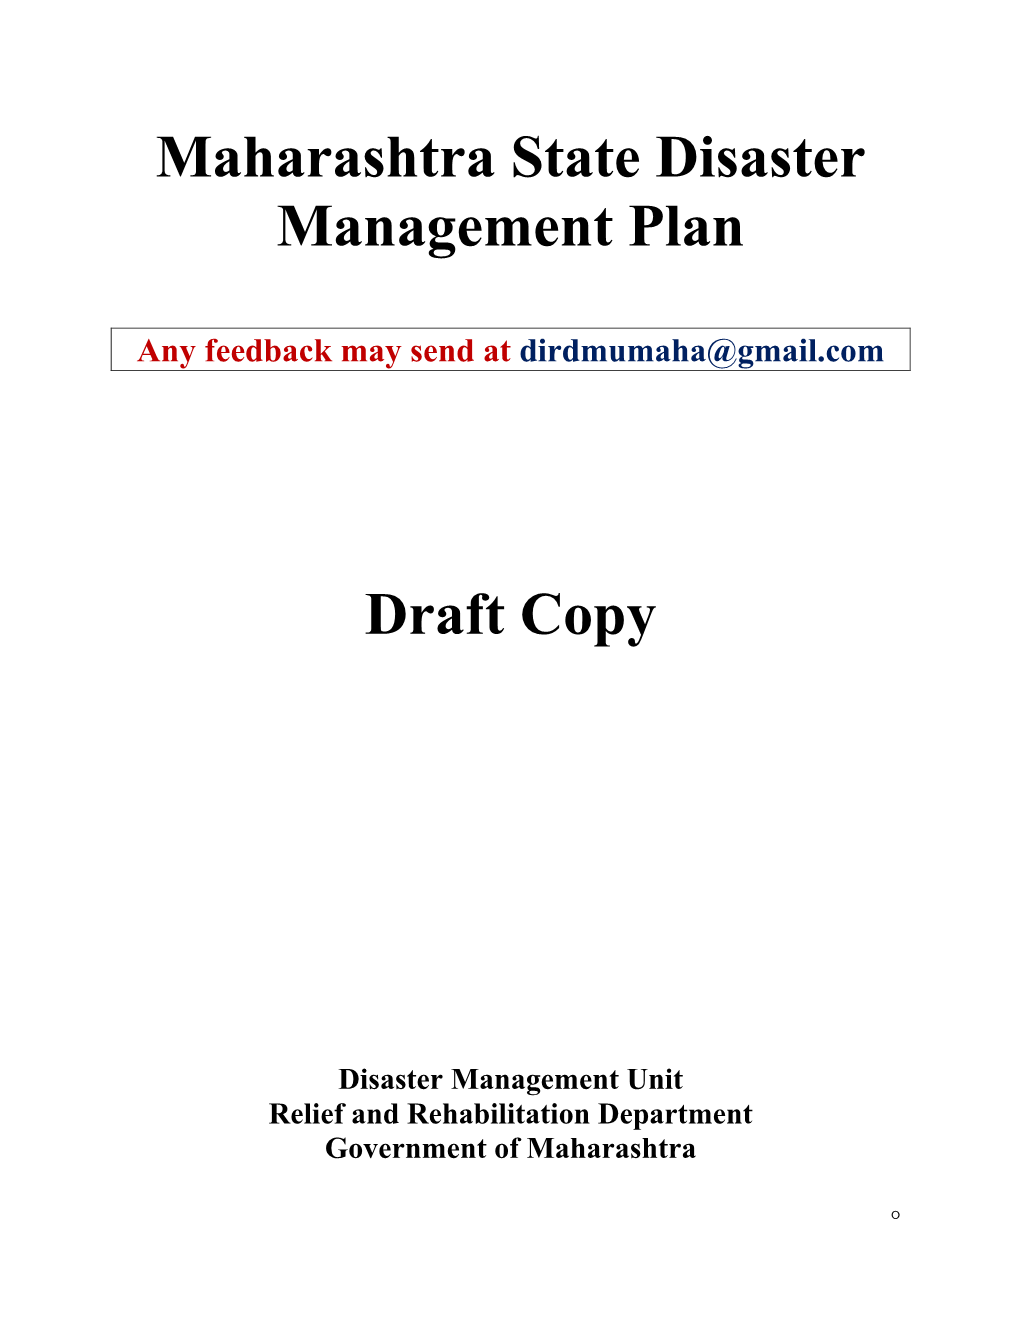 Maharashtra State Disaster Management Plan Draft Copy